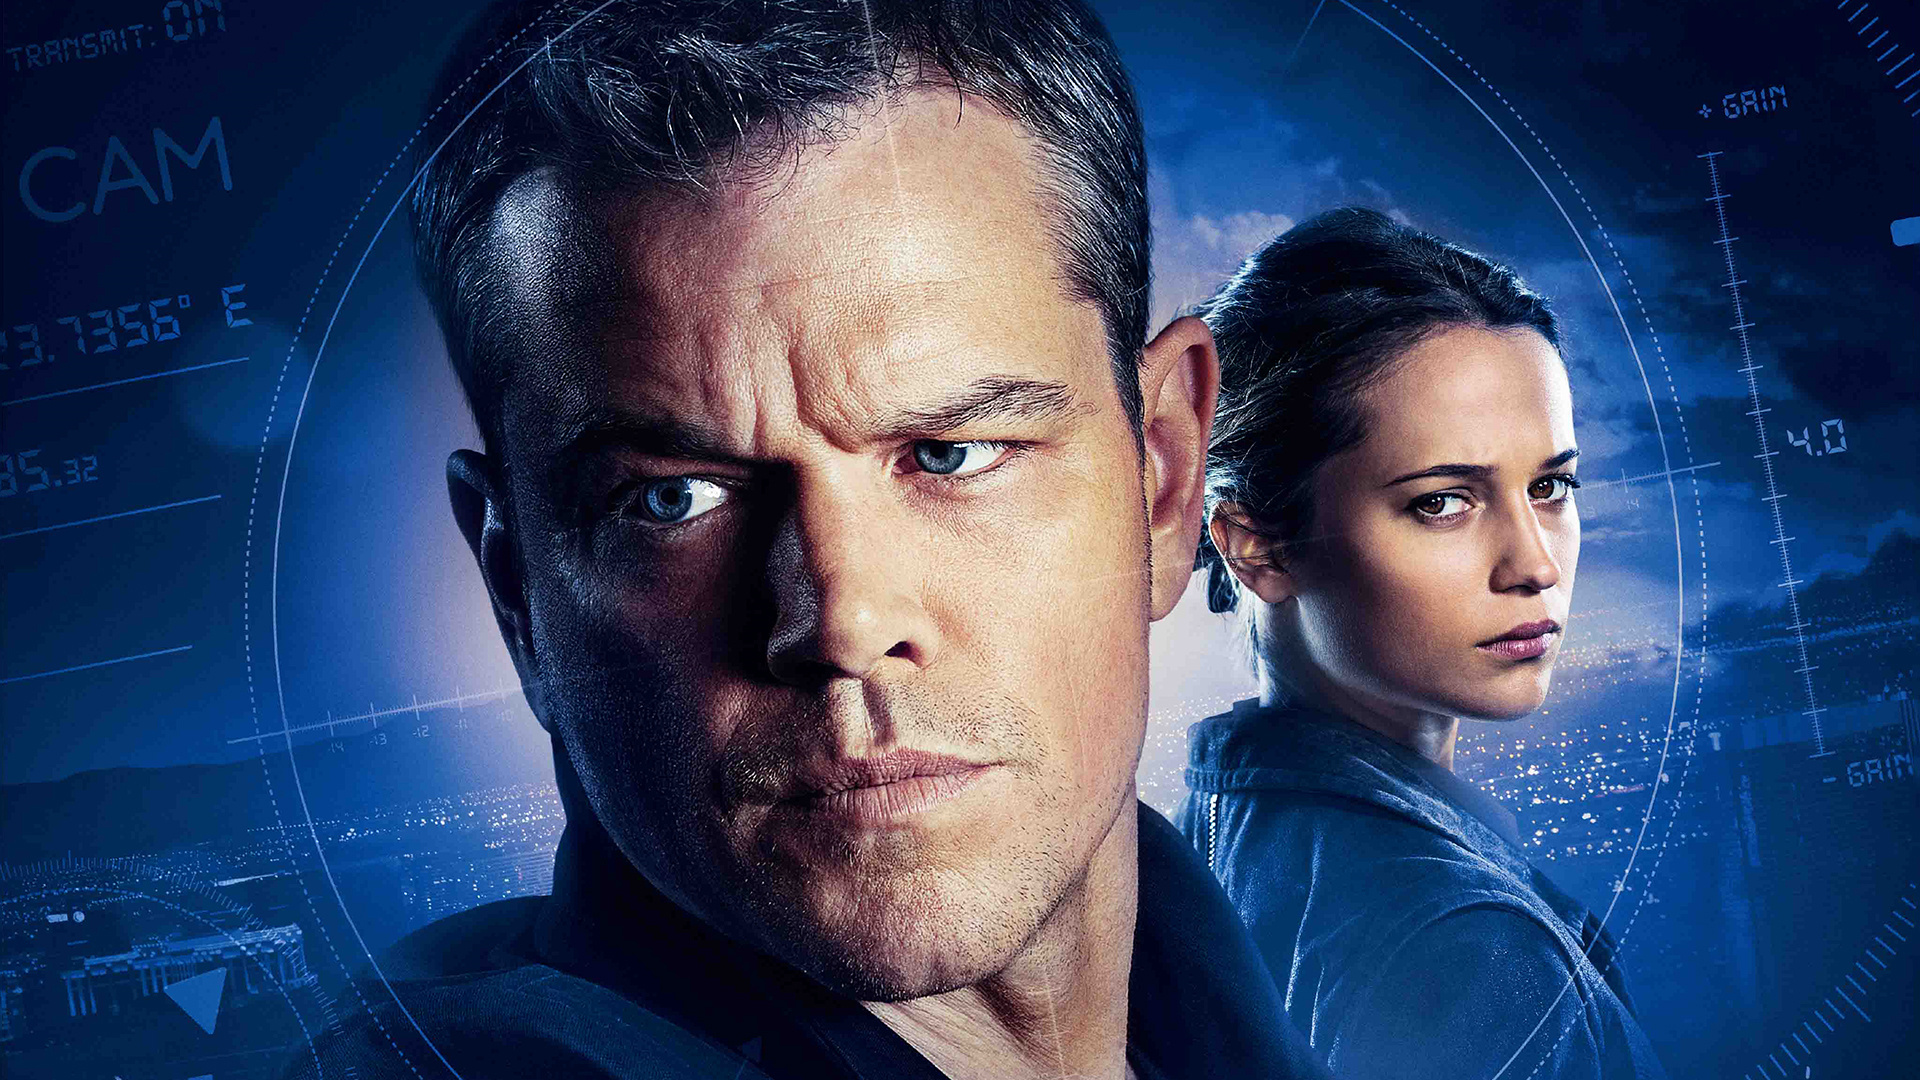 The Bourne: Matt Damon as an amnesiac and former assassin of the CIA's Operation Treadstone. 1920x1080 Full HD Wallpaper.